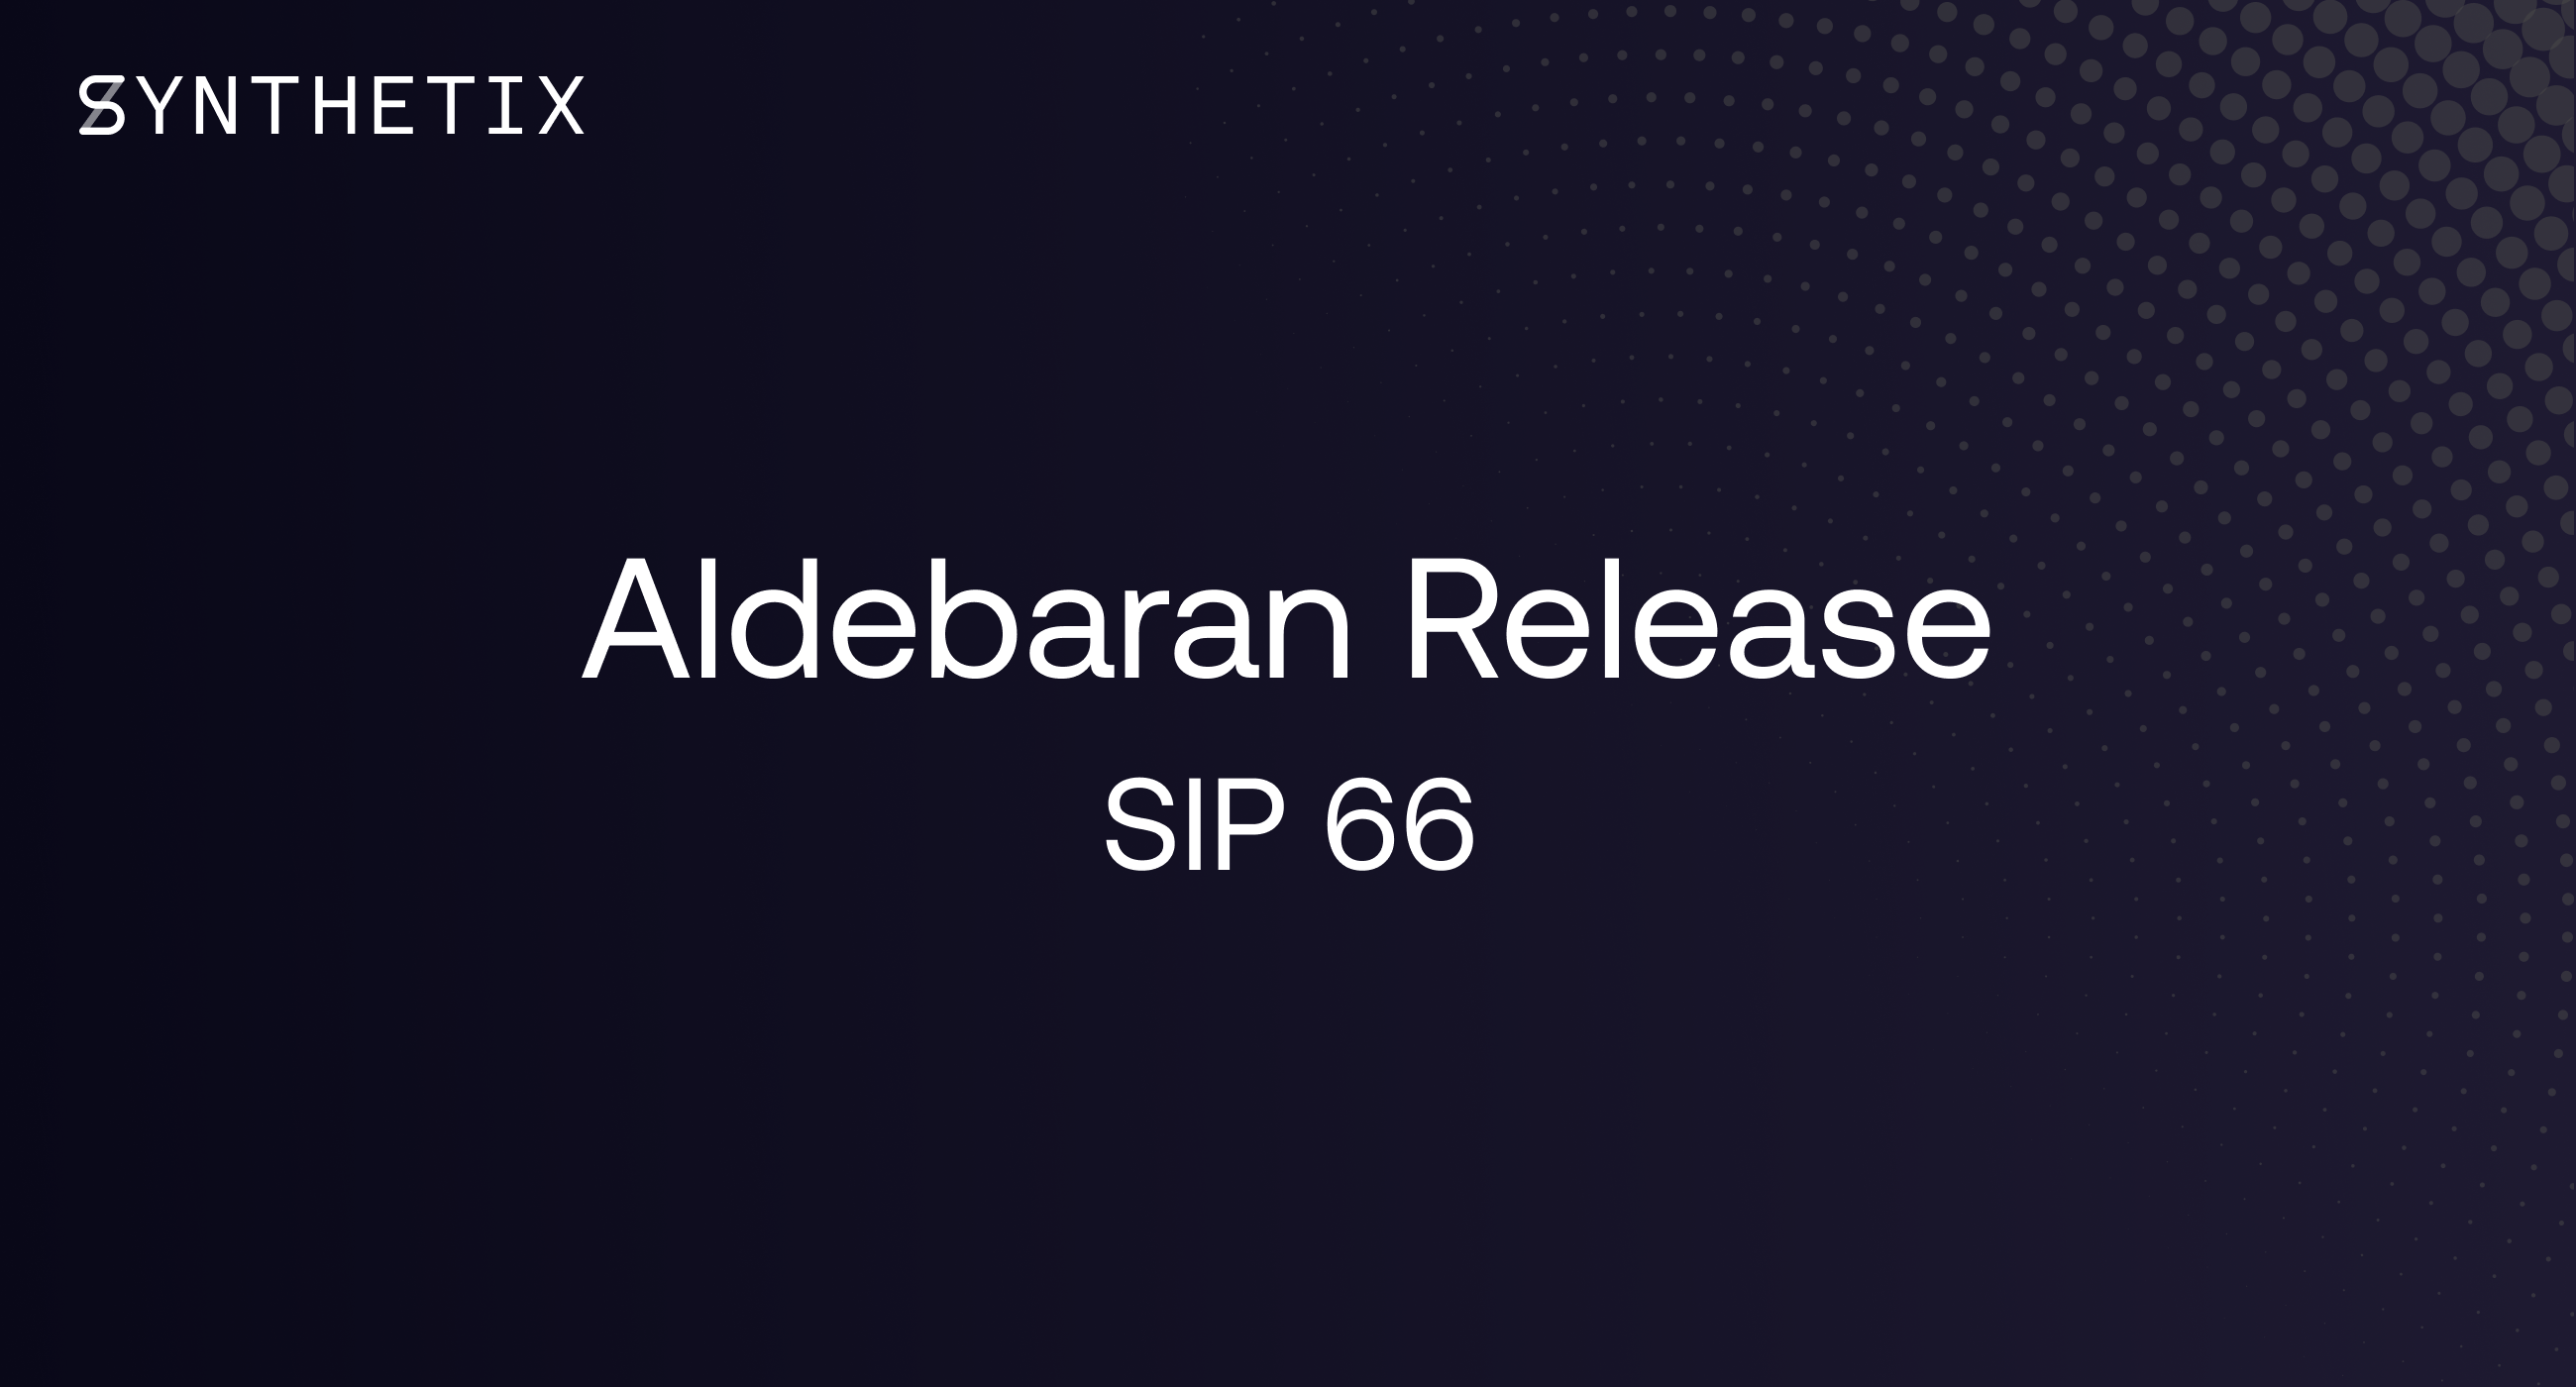 The Aldebaran release